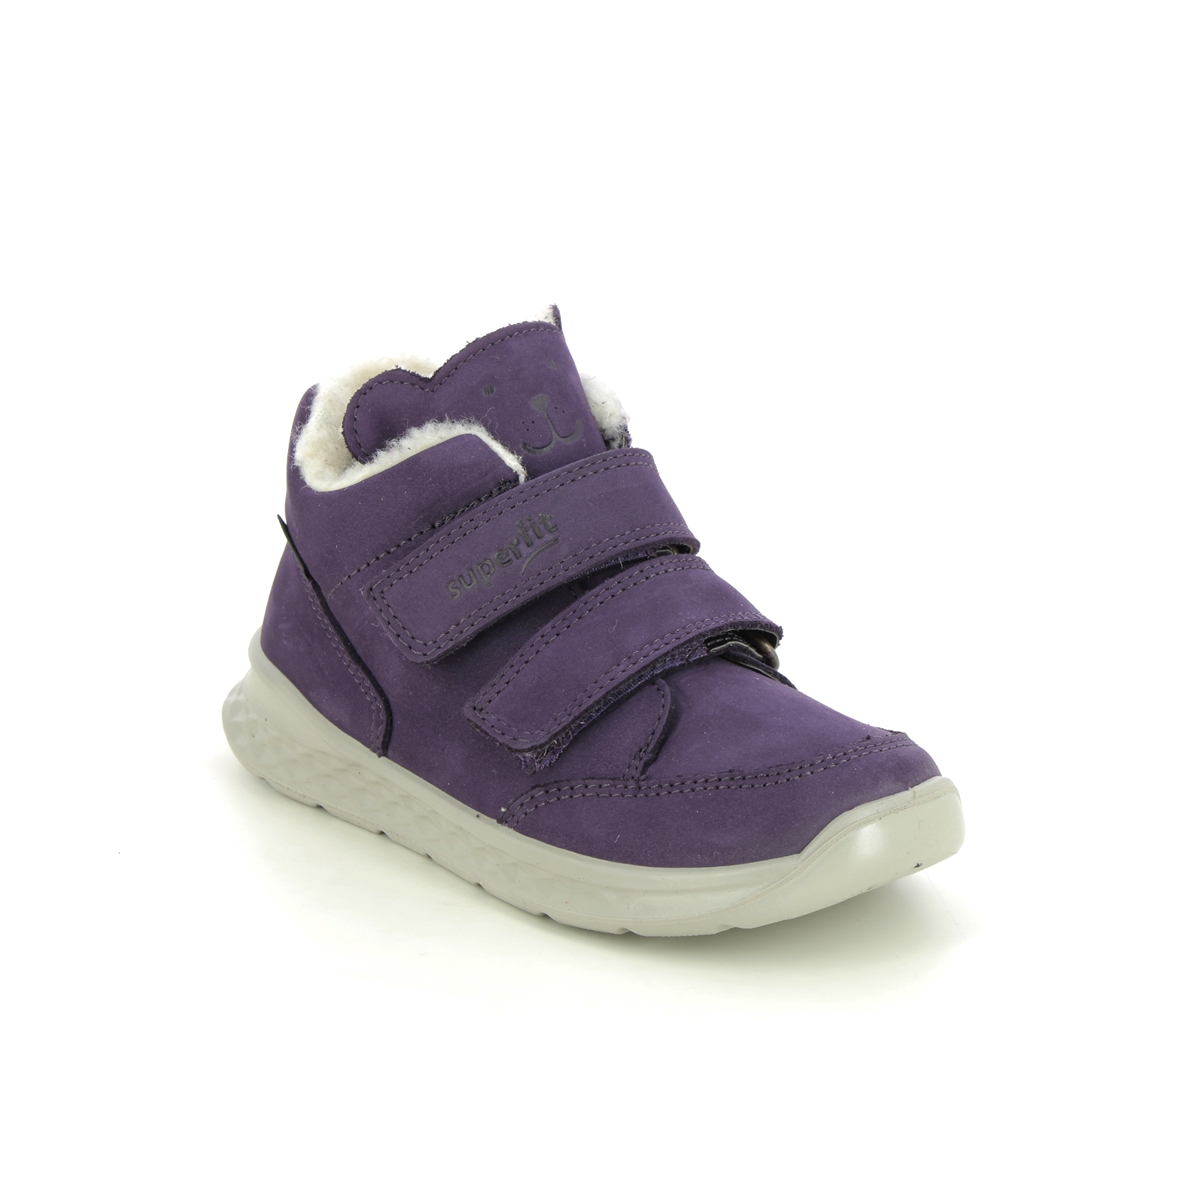 Superfit Breeze 2V Gtx Purple Nubuck Kids Toddler Girls Boots 1000372-8500 In Size 24 In Plain Purple Nubuck